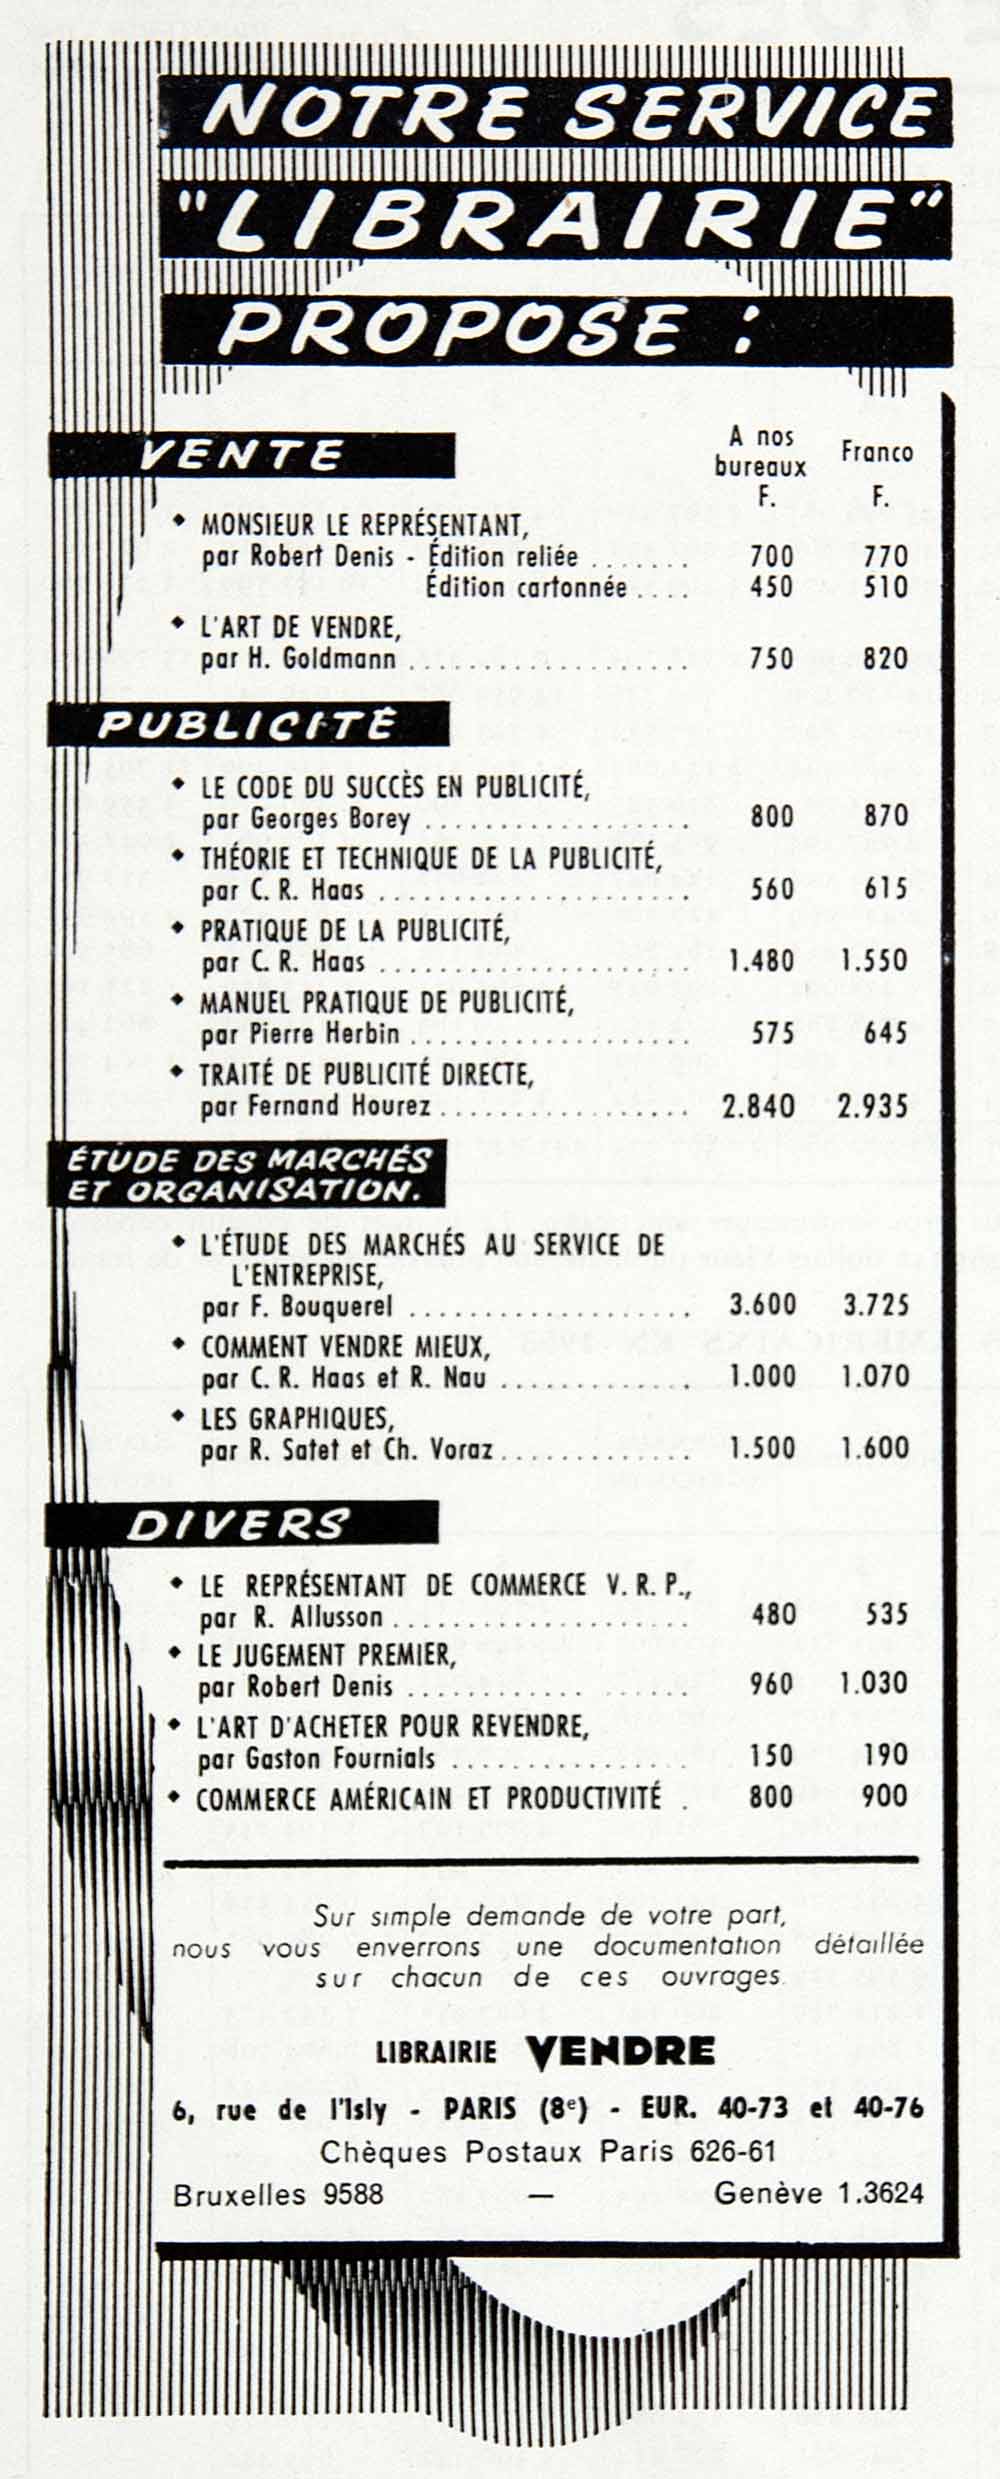 1955 Ad Librairie Vendre Library Borey Goldmann Bouquerel French VEN2